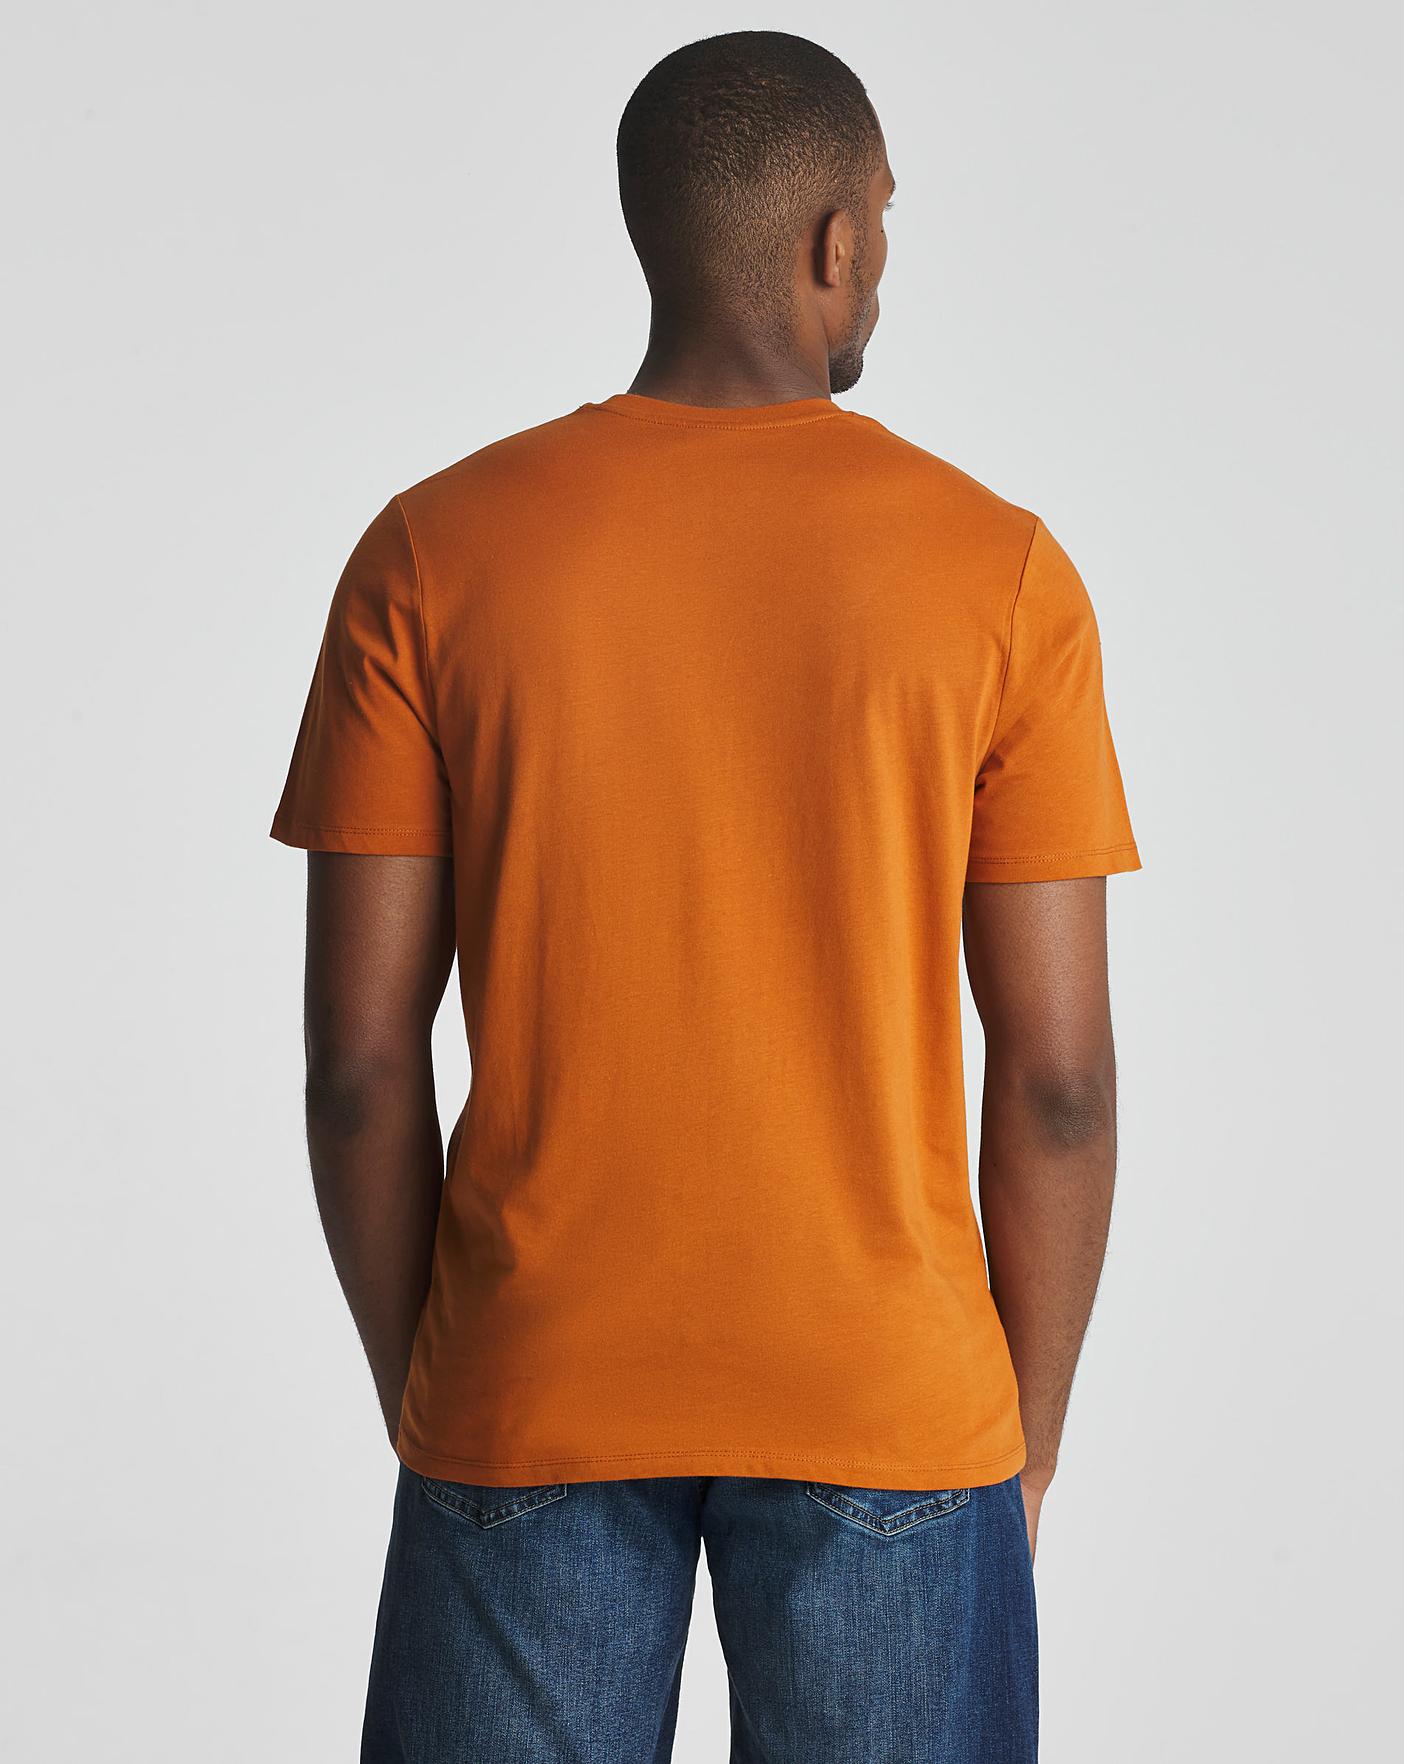 texas orange t shirt